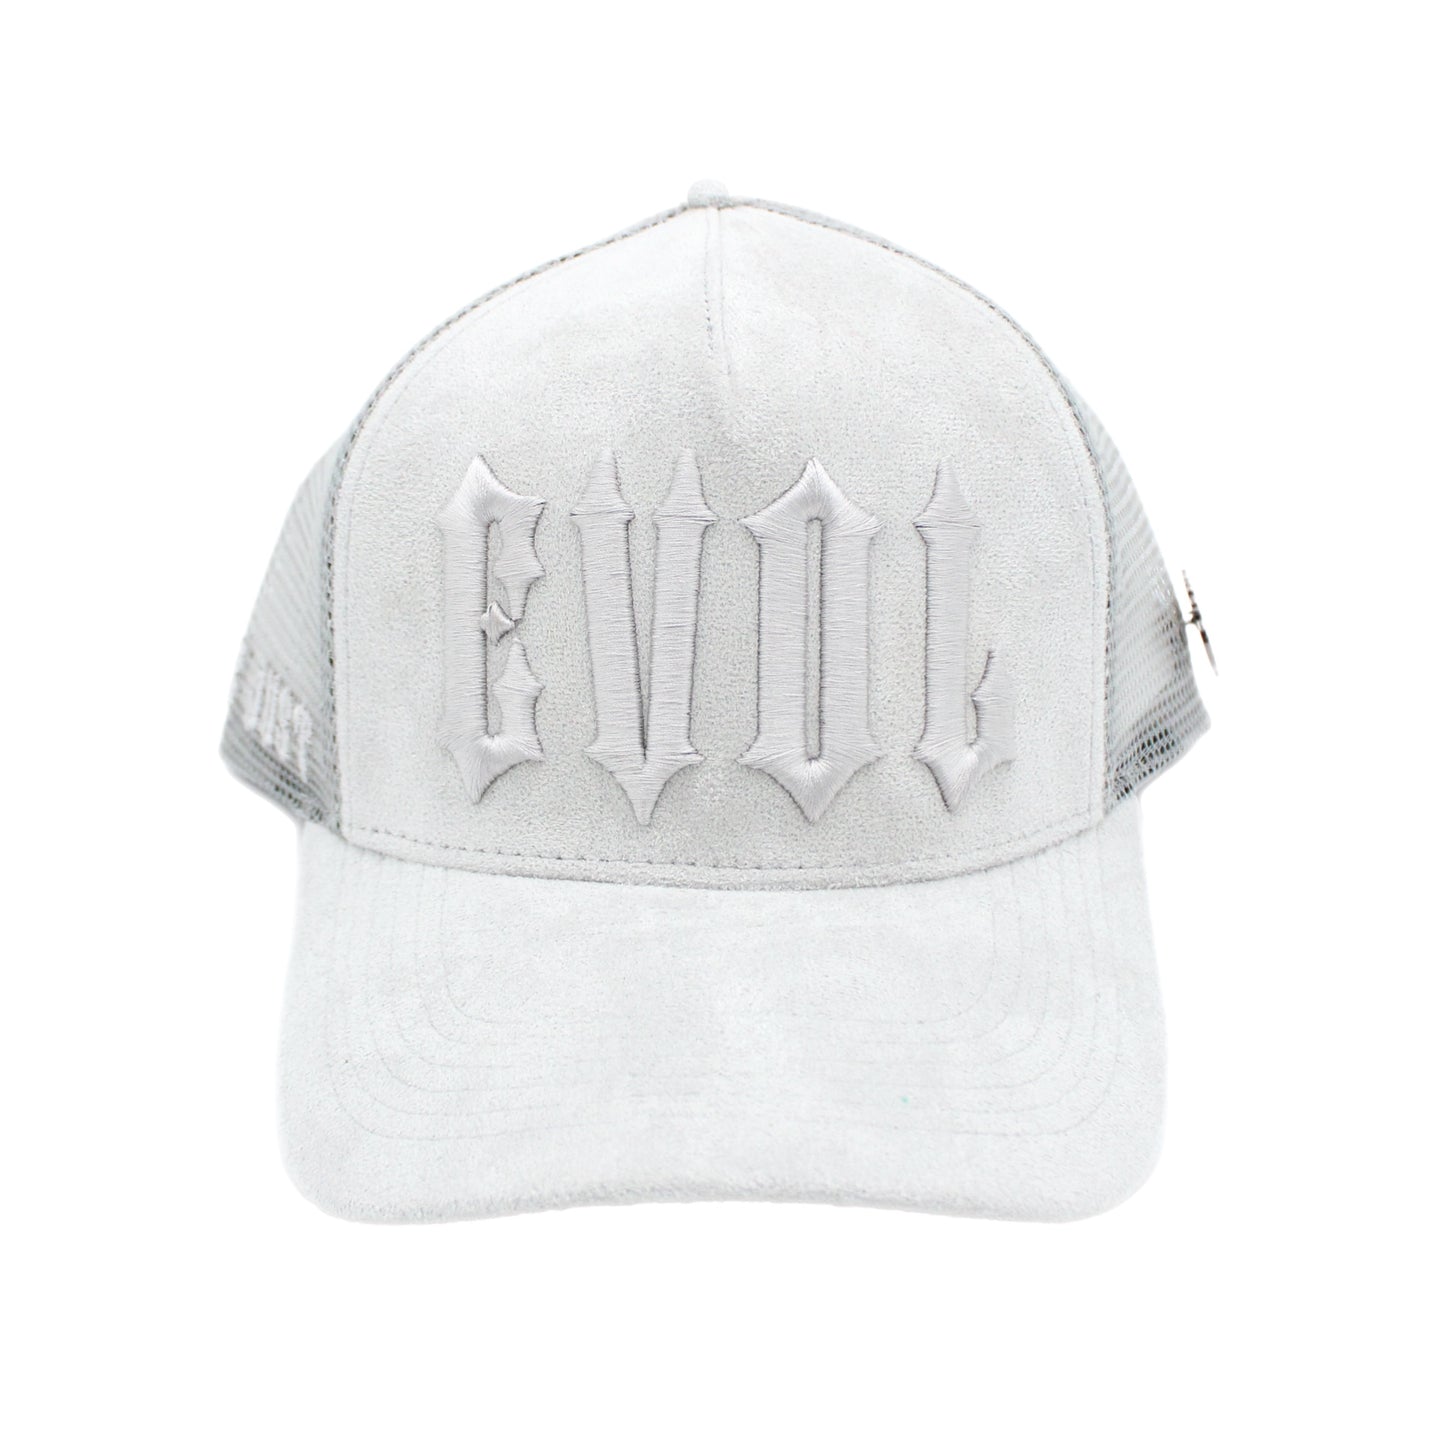 EVOL New Font Trucker Hat Grey/Platnium (Suede Edition)